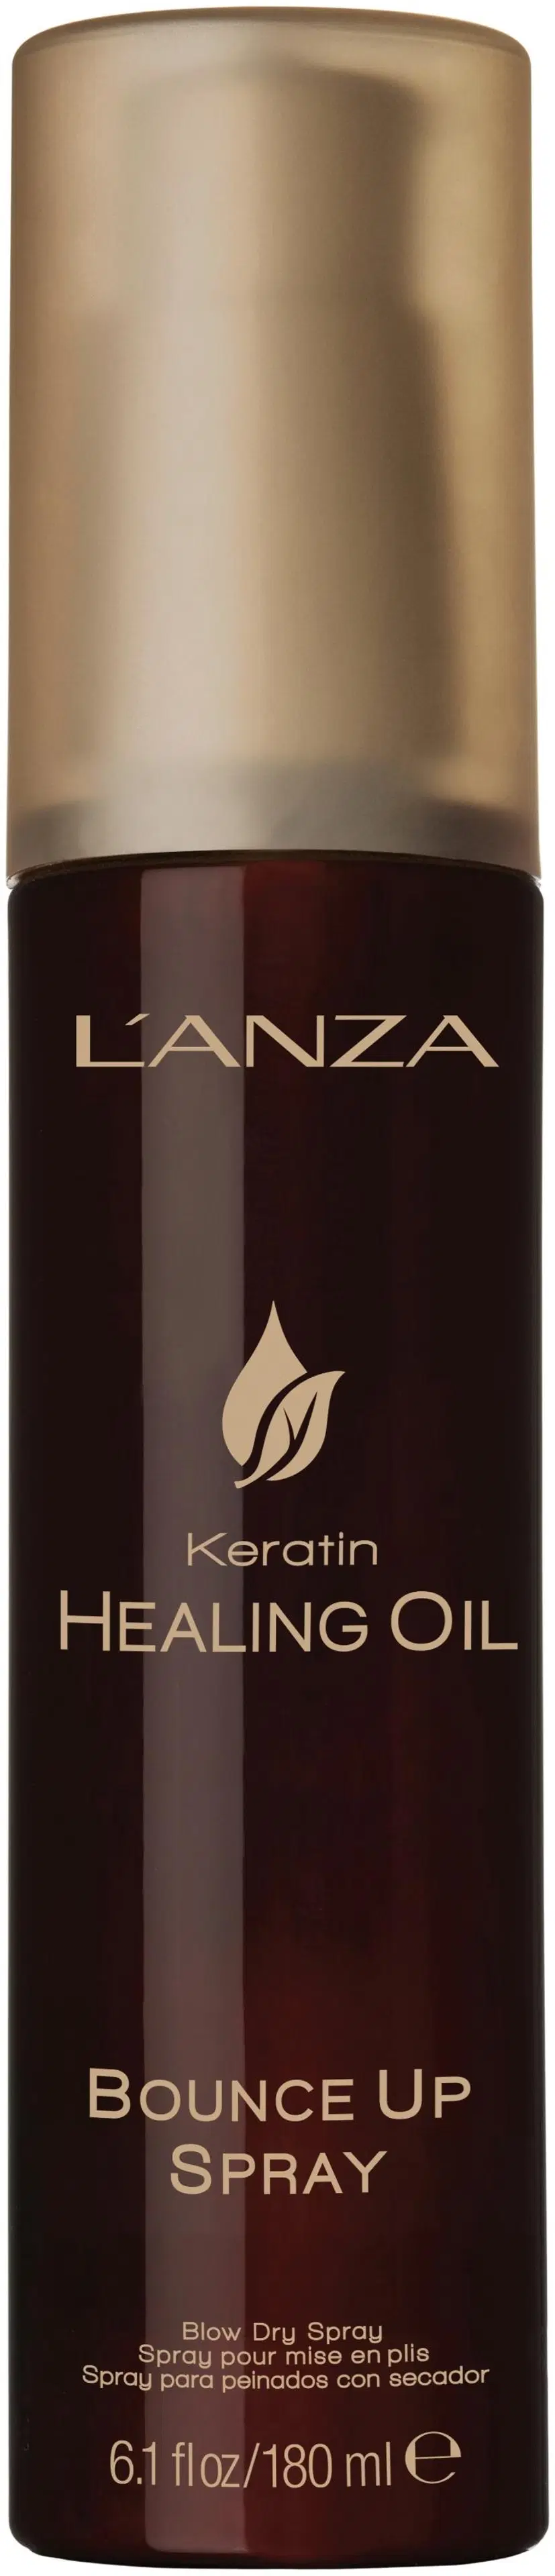 L´ANZA Keratin Healing Oil Bounce Up Spray föönaussuihke 180 ml